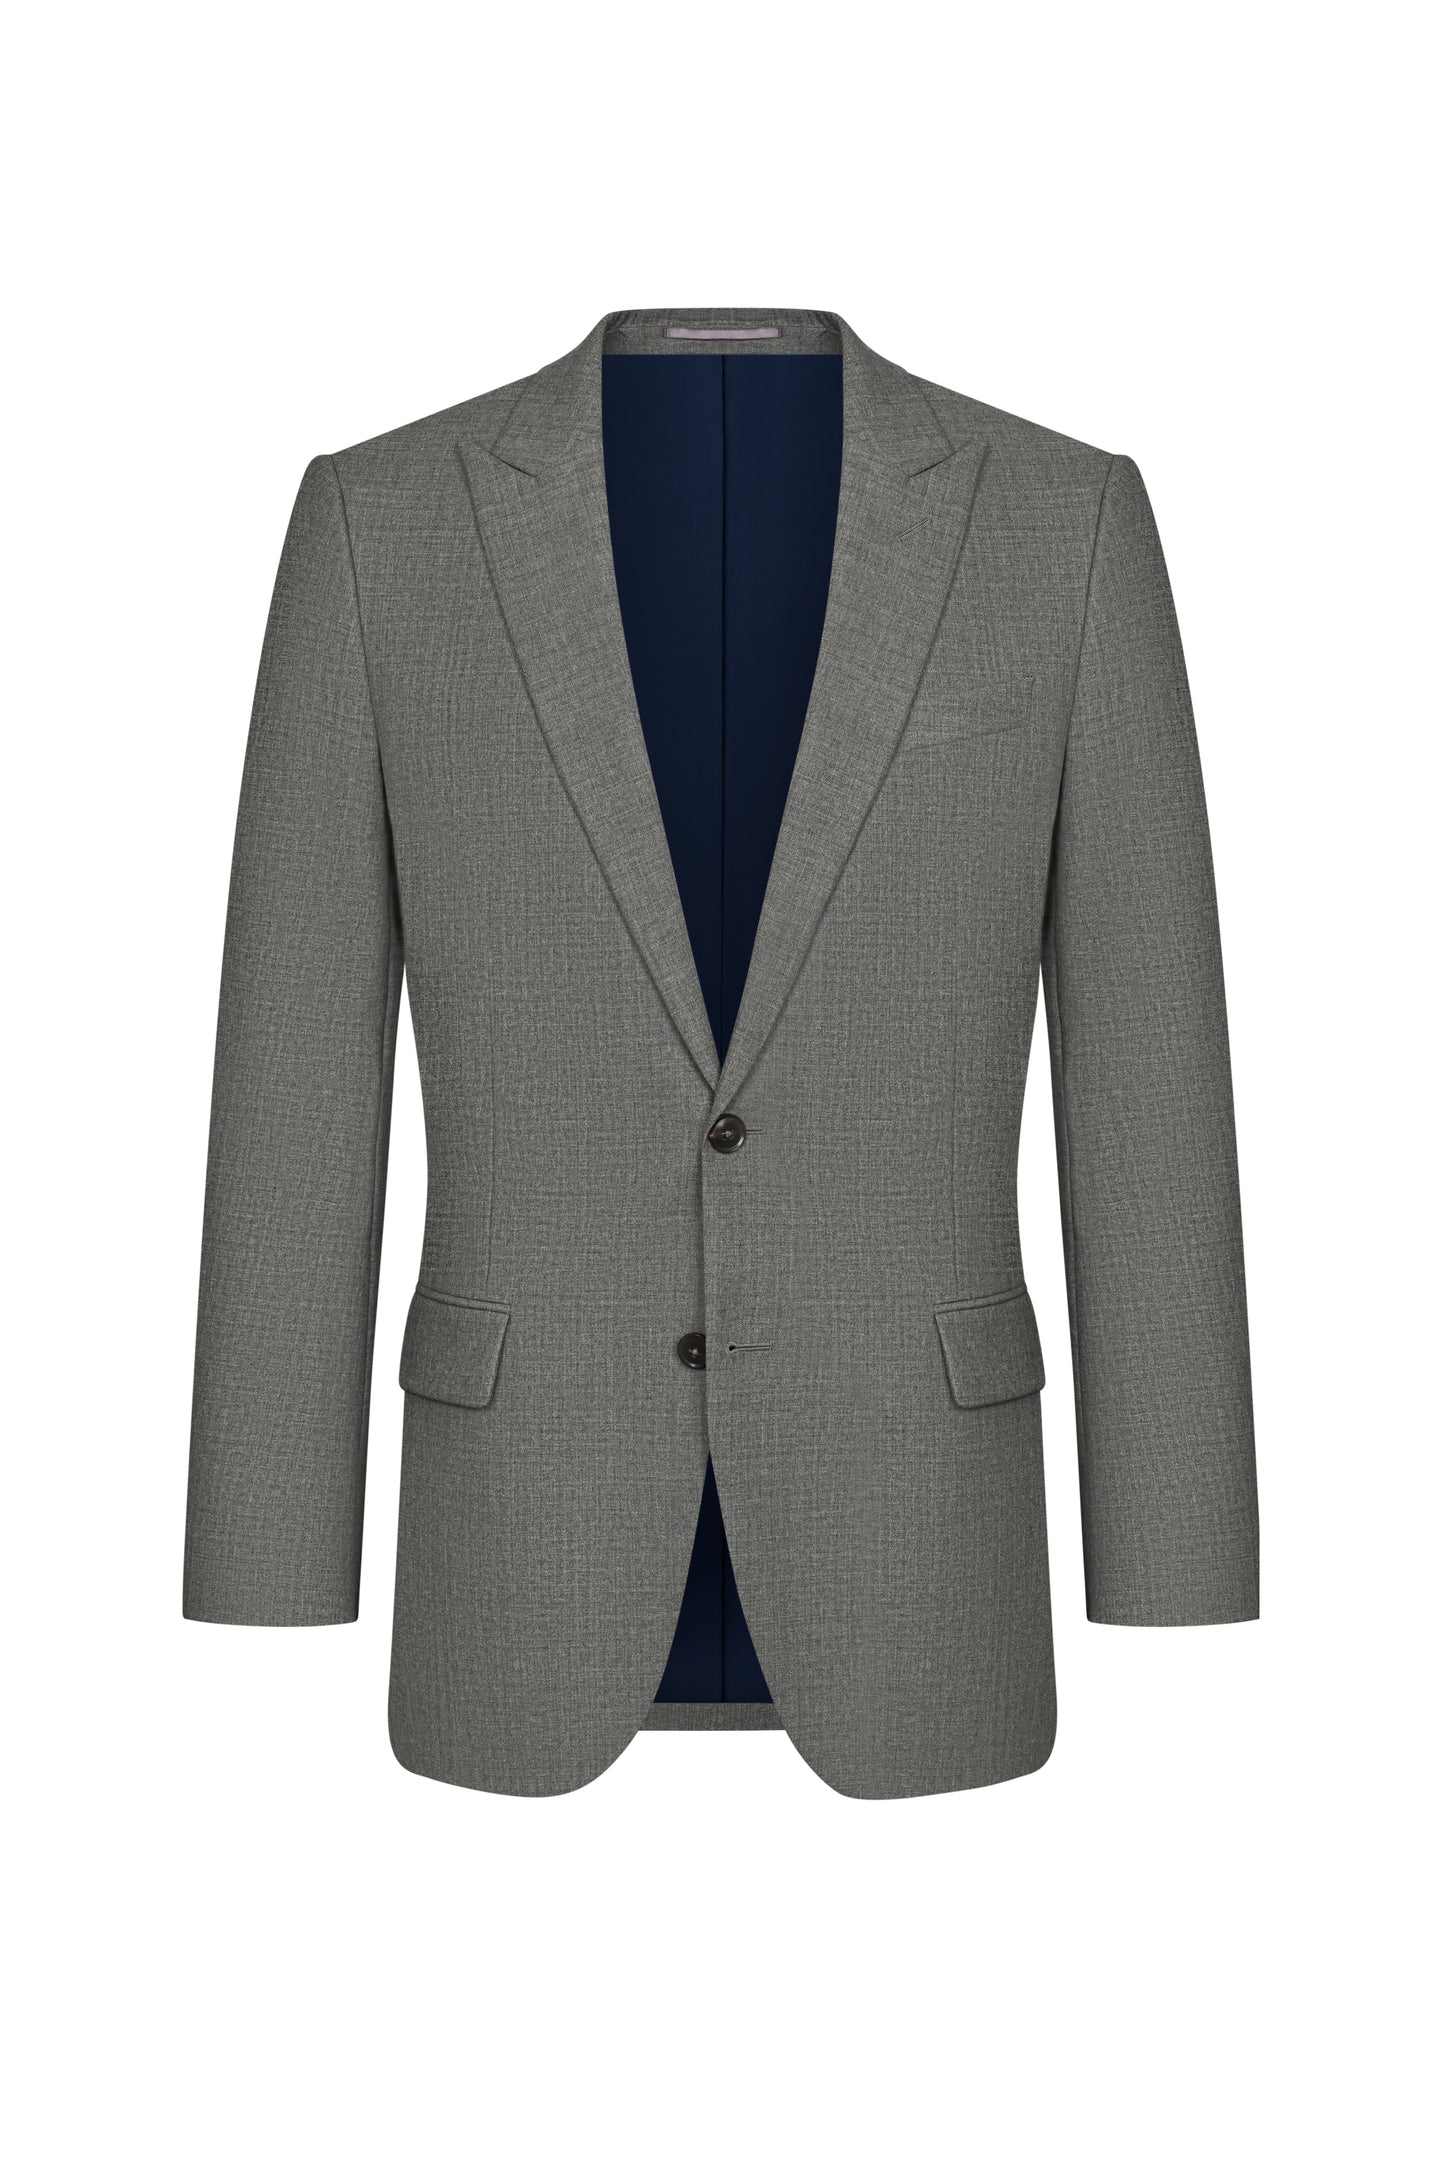 Scabal Cool Grey Plain Weave Custom Suit